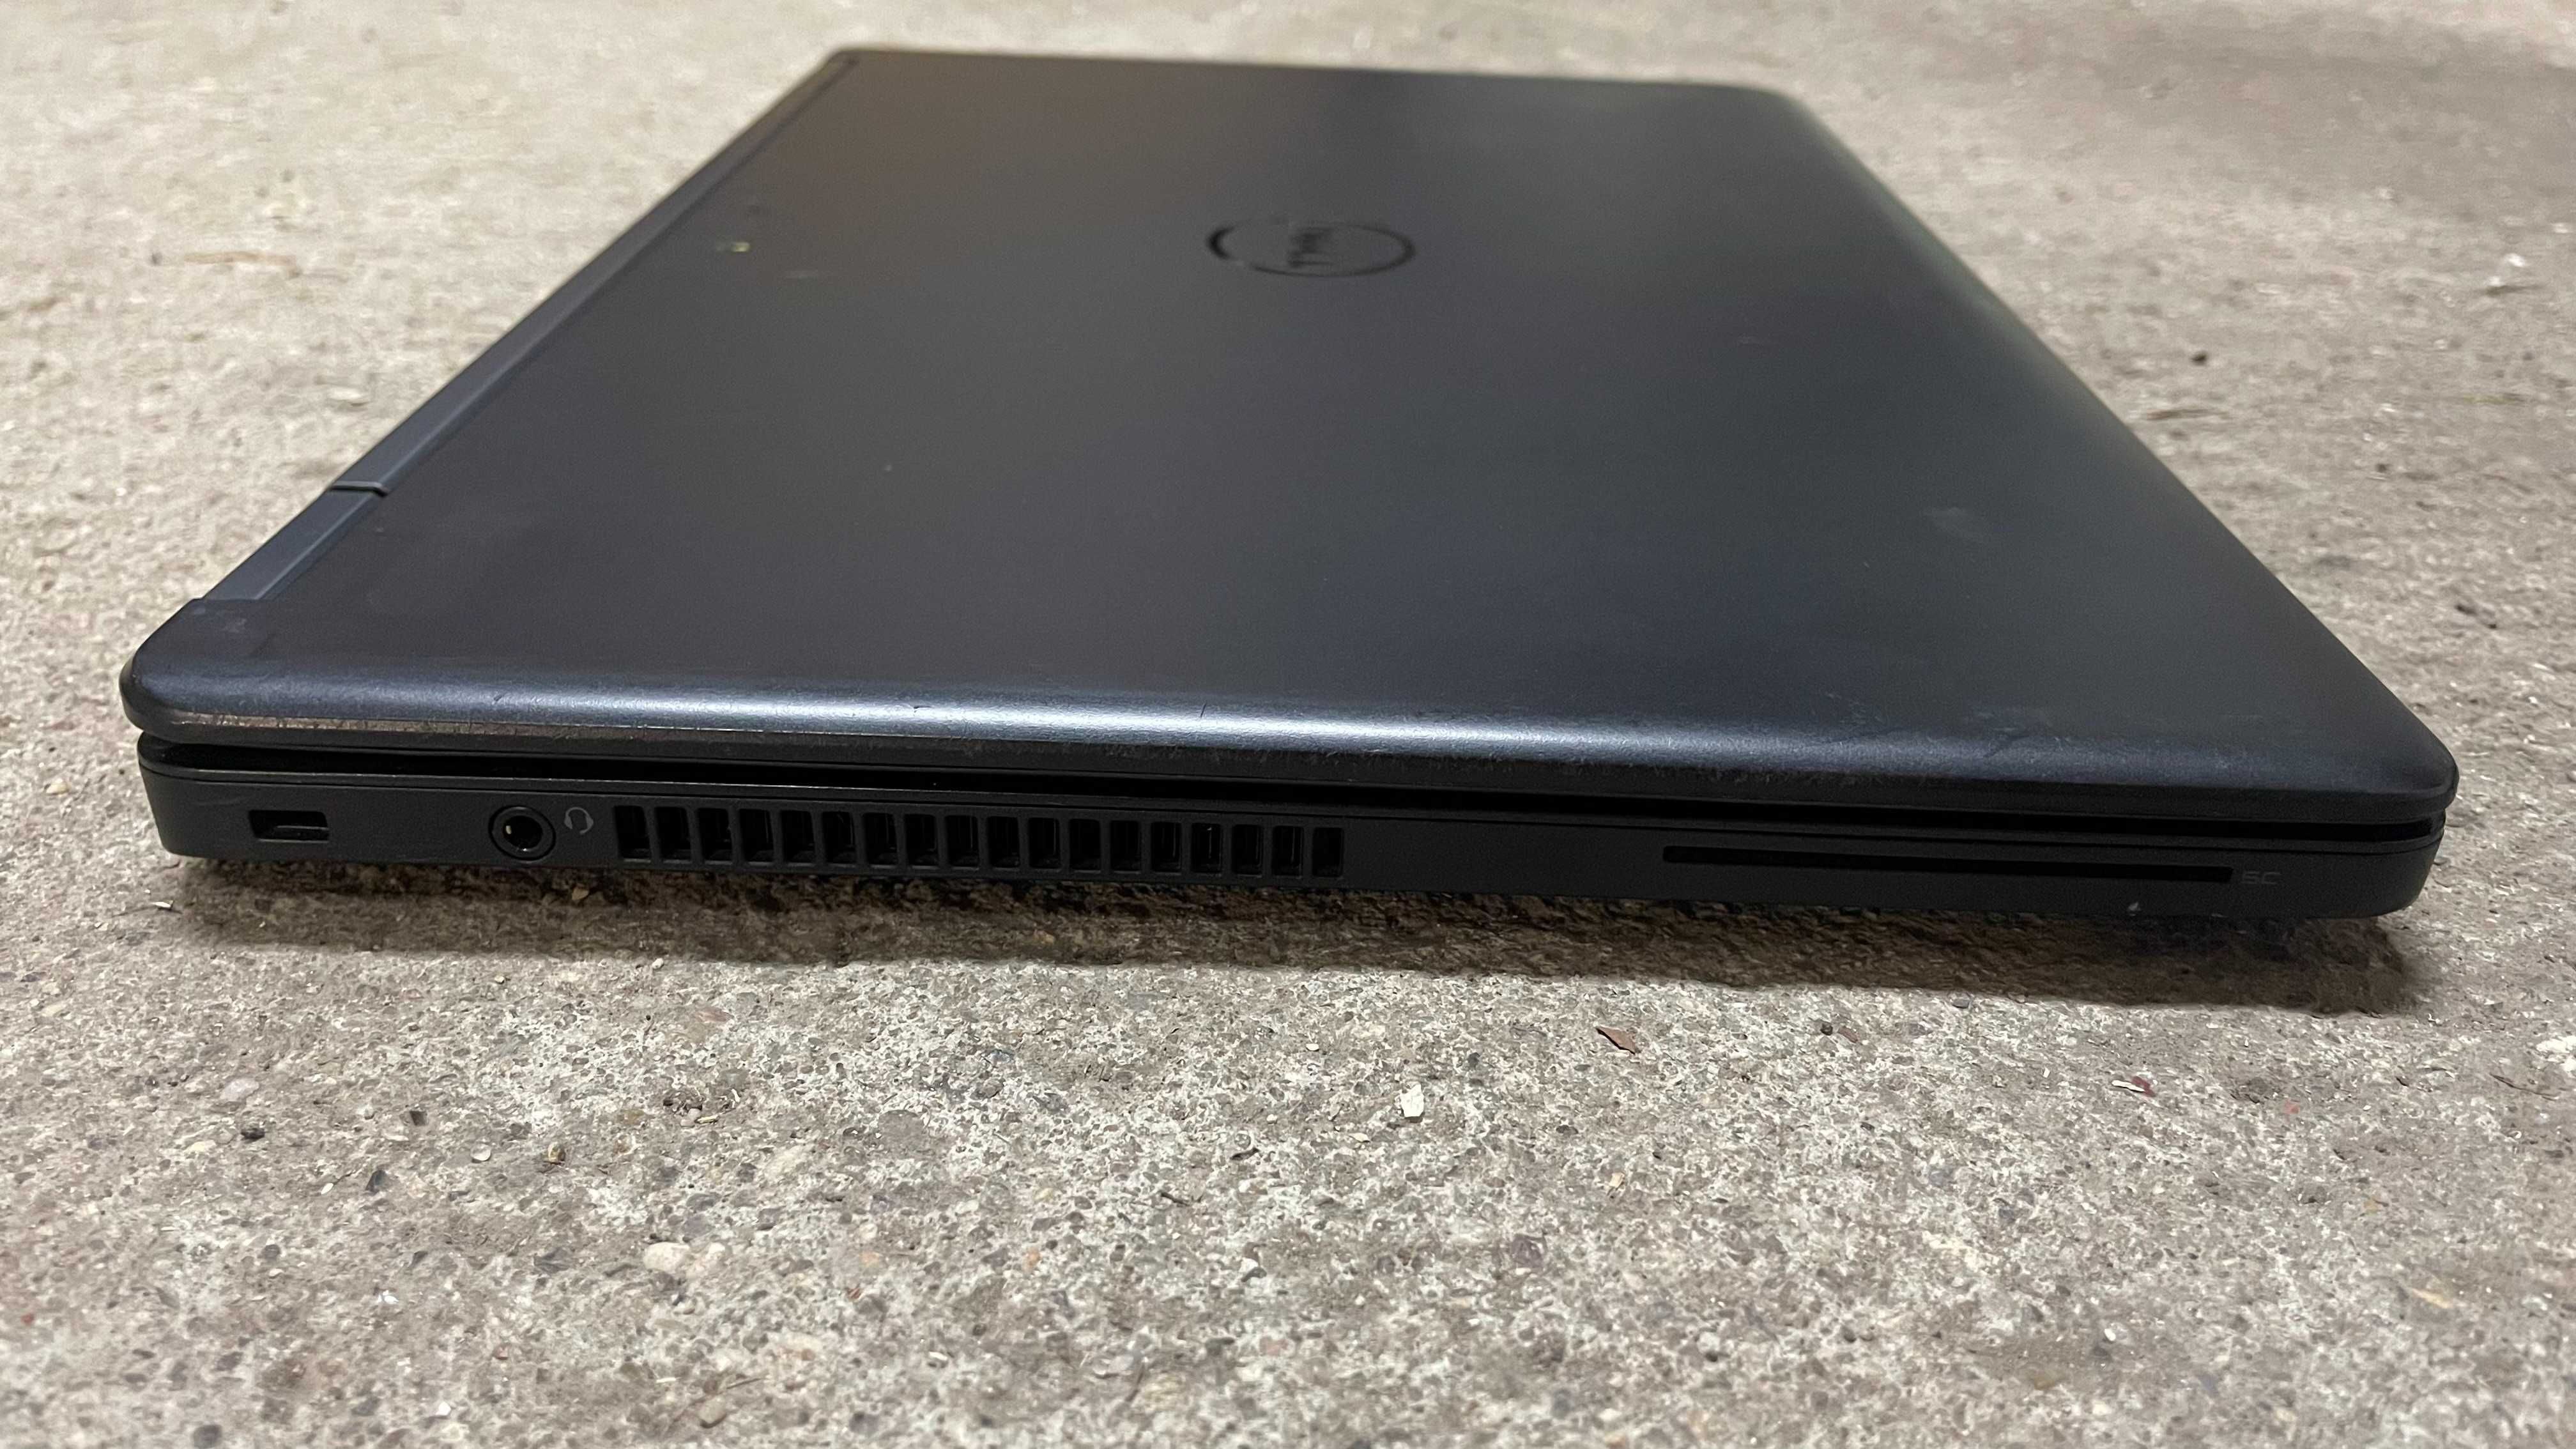 Dell E5450 Laptop 14" Intel i5 16GB 120GB okazja tanio sprawny